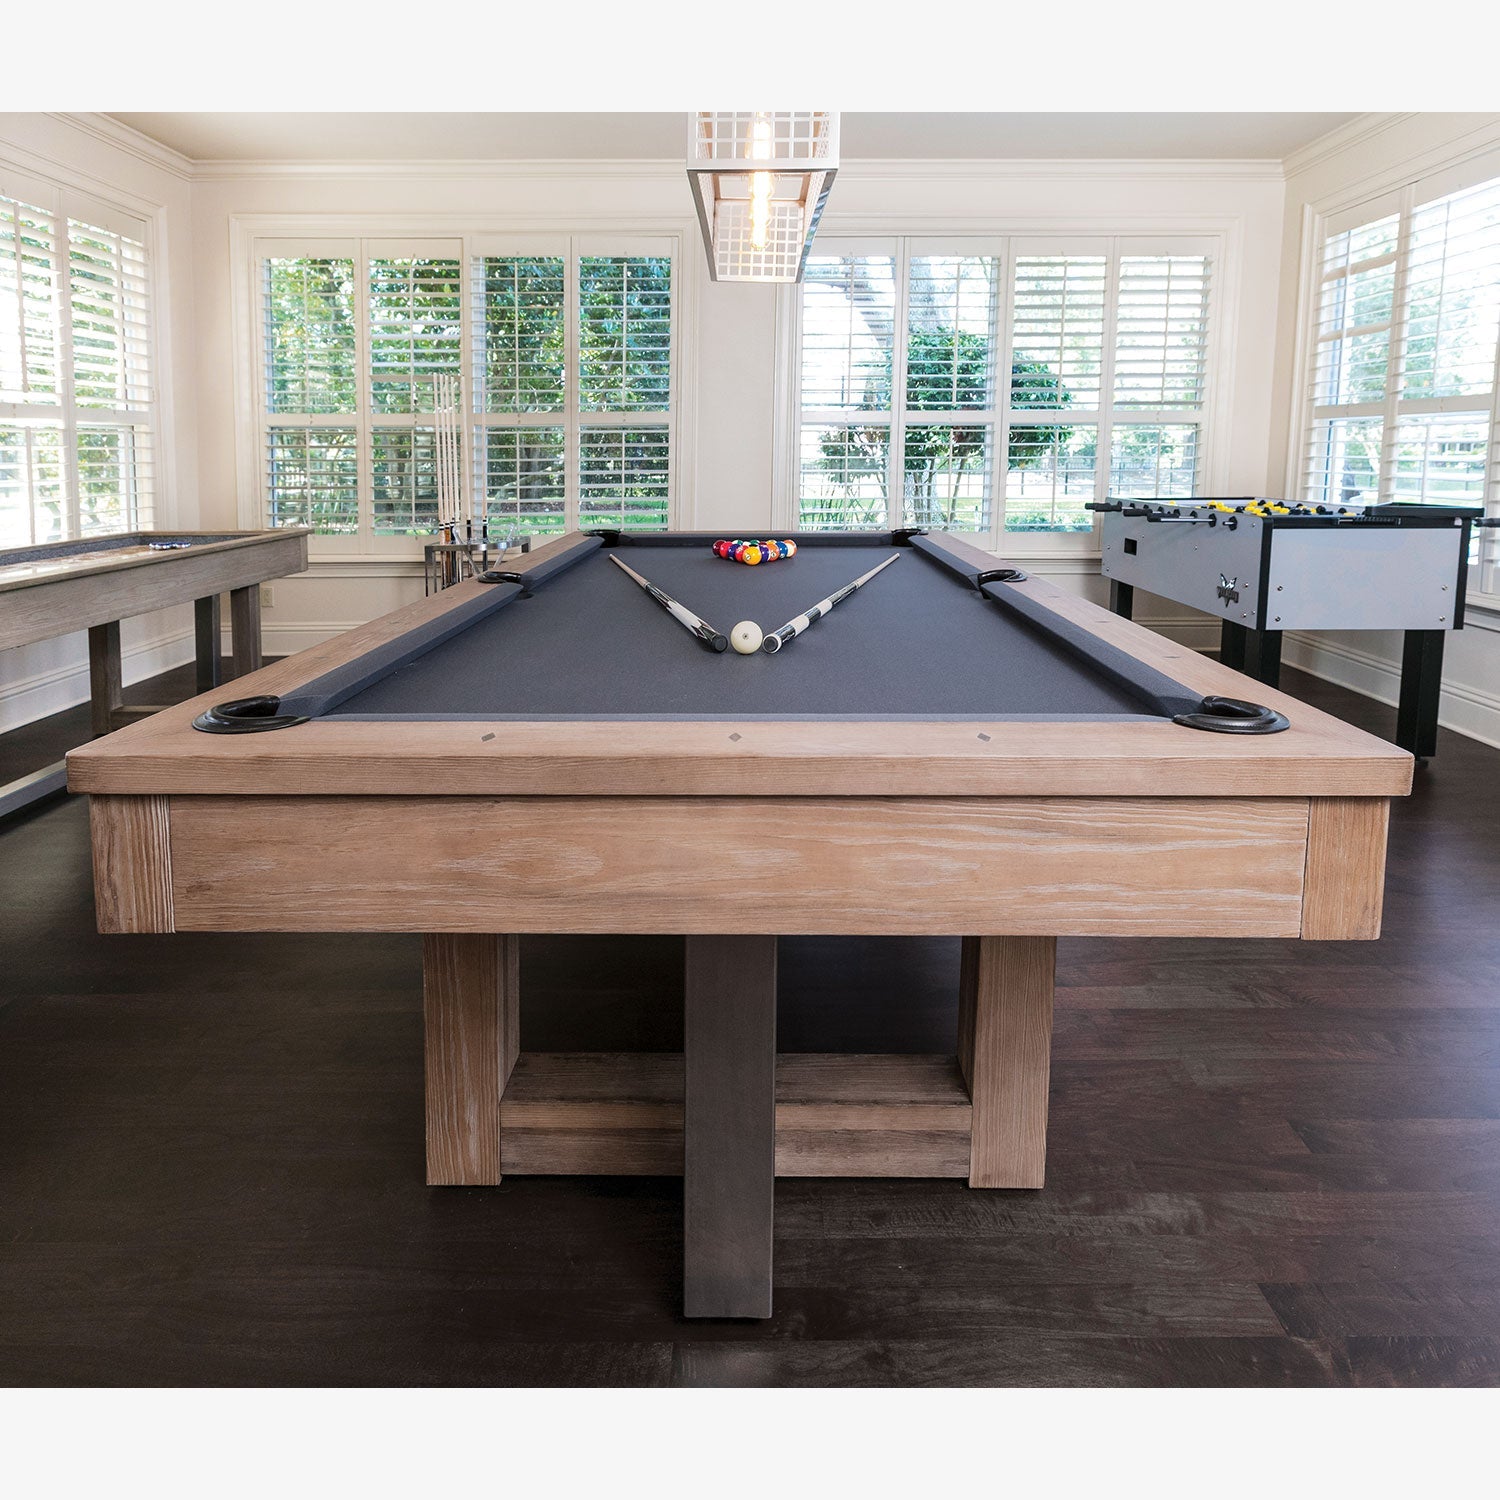 American Heritage Abbey Billiard Table - Upper Livin